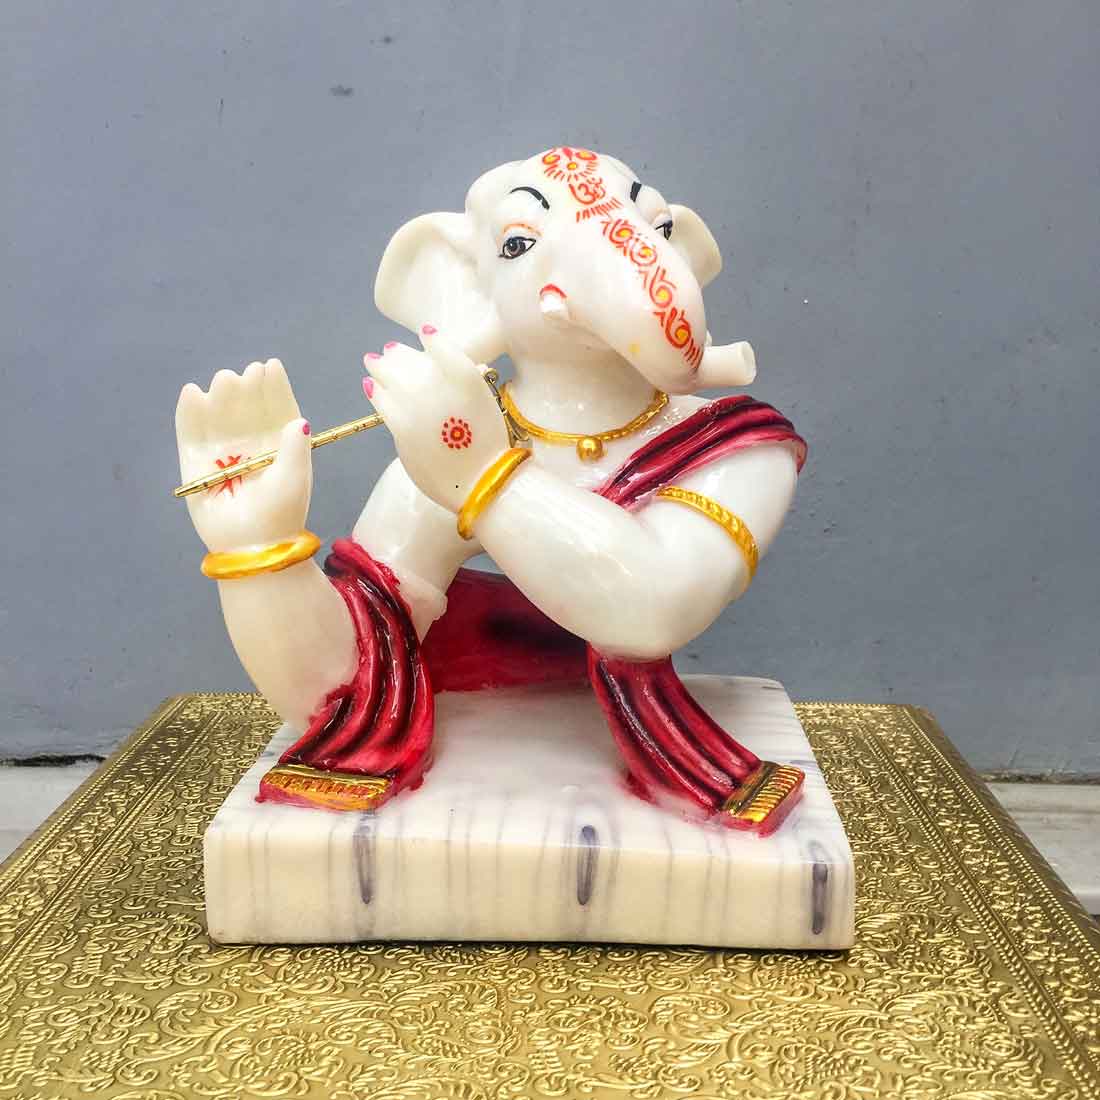 Ganesha Idol For Home Decor And Gift Size- 23x11x20 Cm, Ganpati Murti, Ganesh  Idol, Ganesh Ji Murti, Ganesha Statue, Ganpati Statue - Bongfooodie,  Hyderabad | ID: 2850915143997